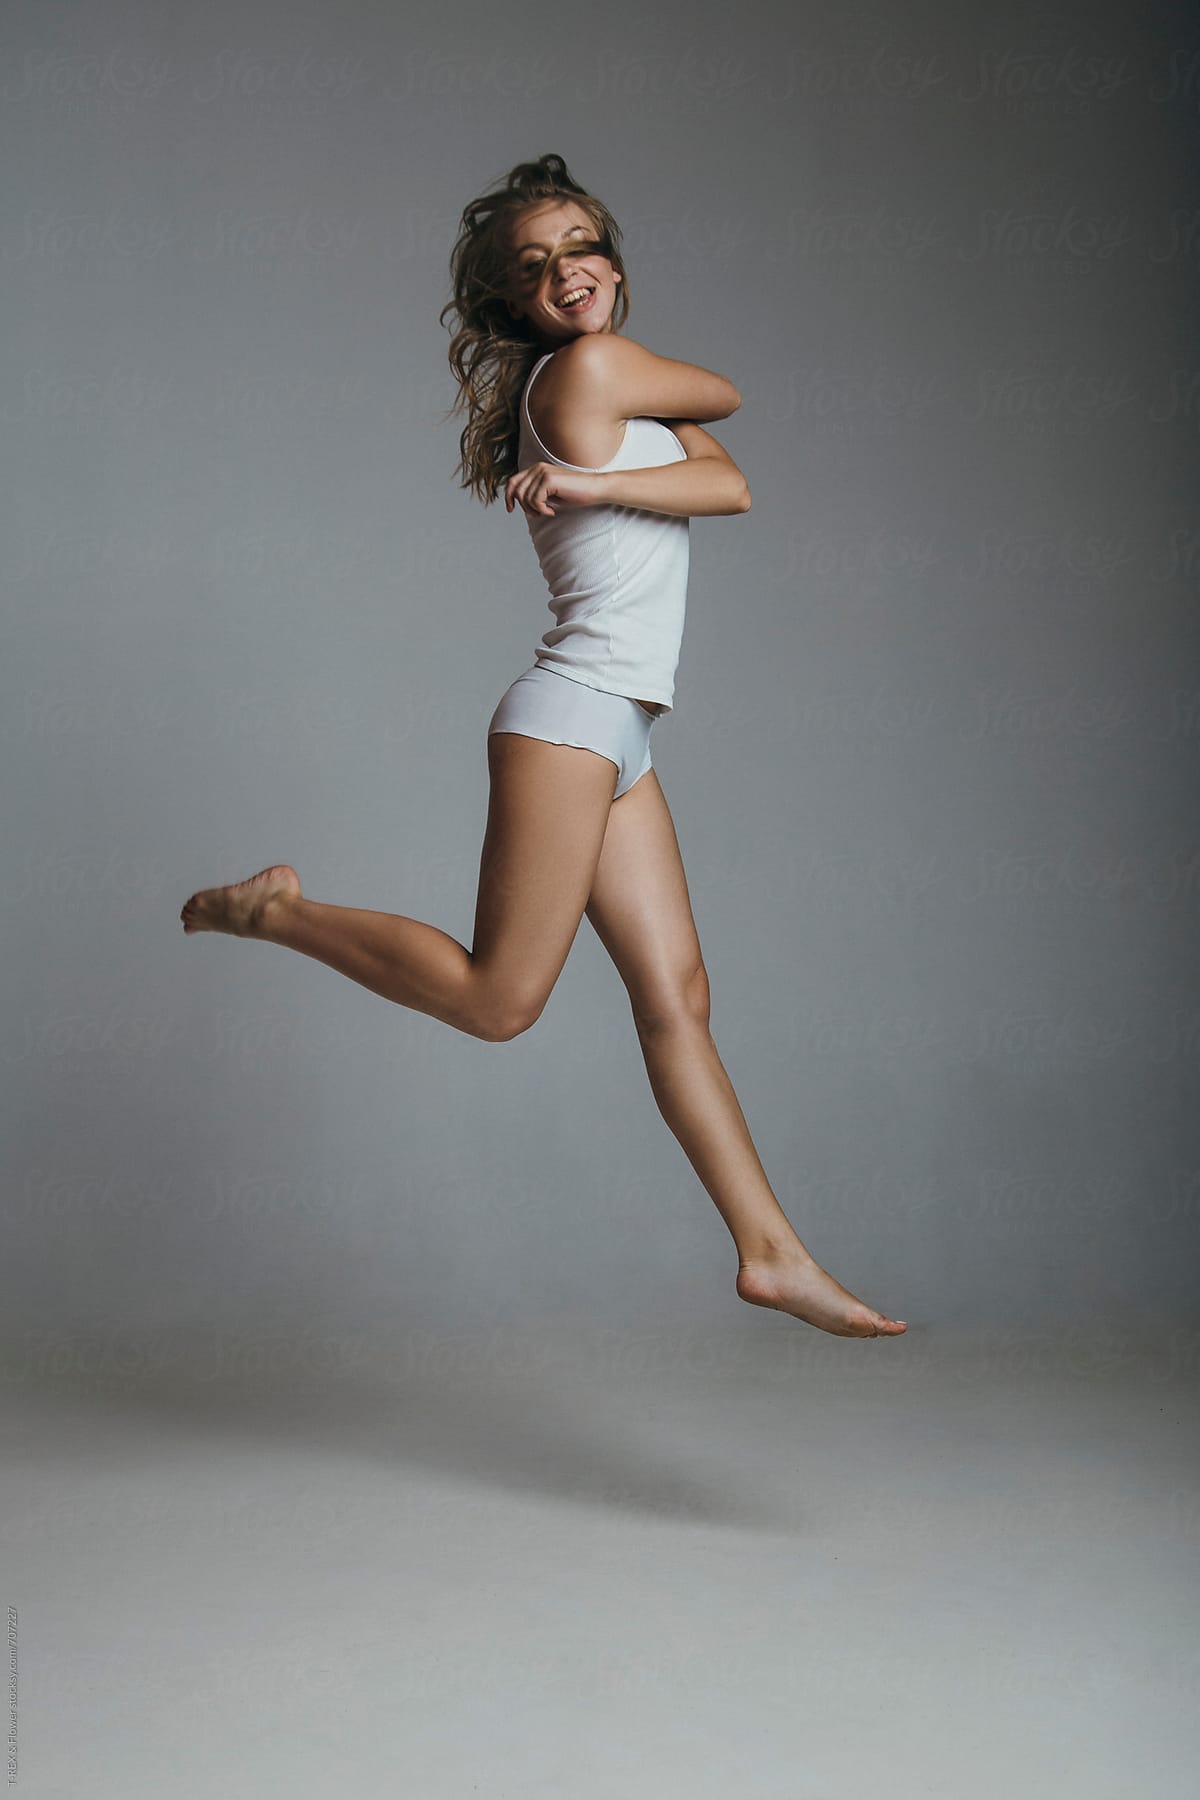 Model test of girl jumping in the studio